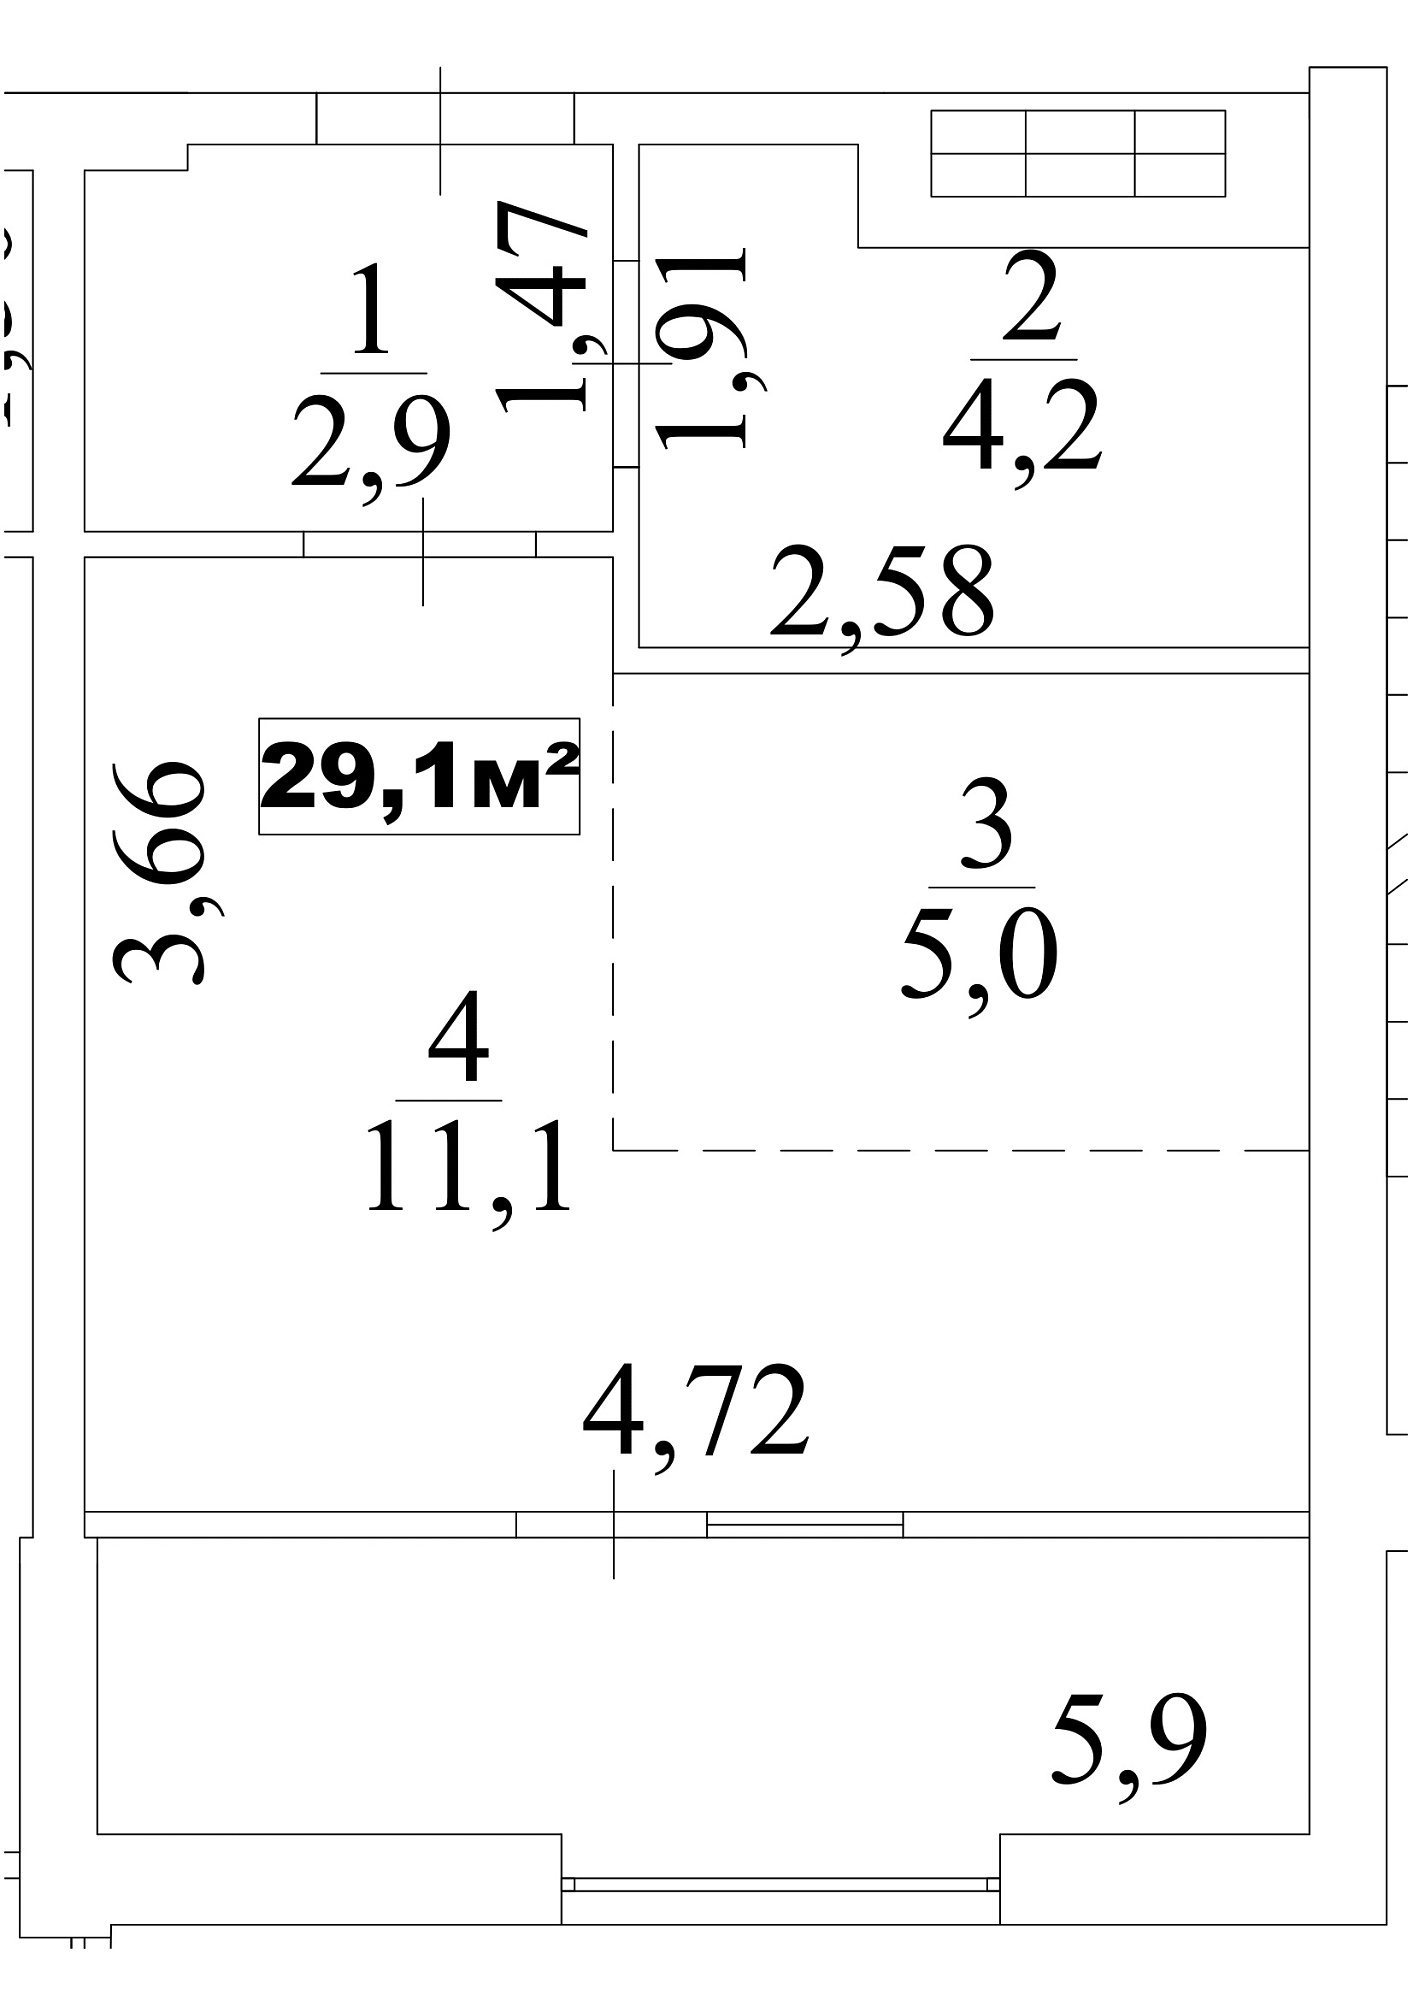 Planning Smart flats area 29.1m2, AB-10-07/0055а.